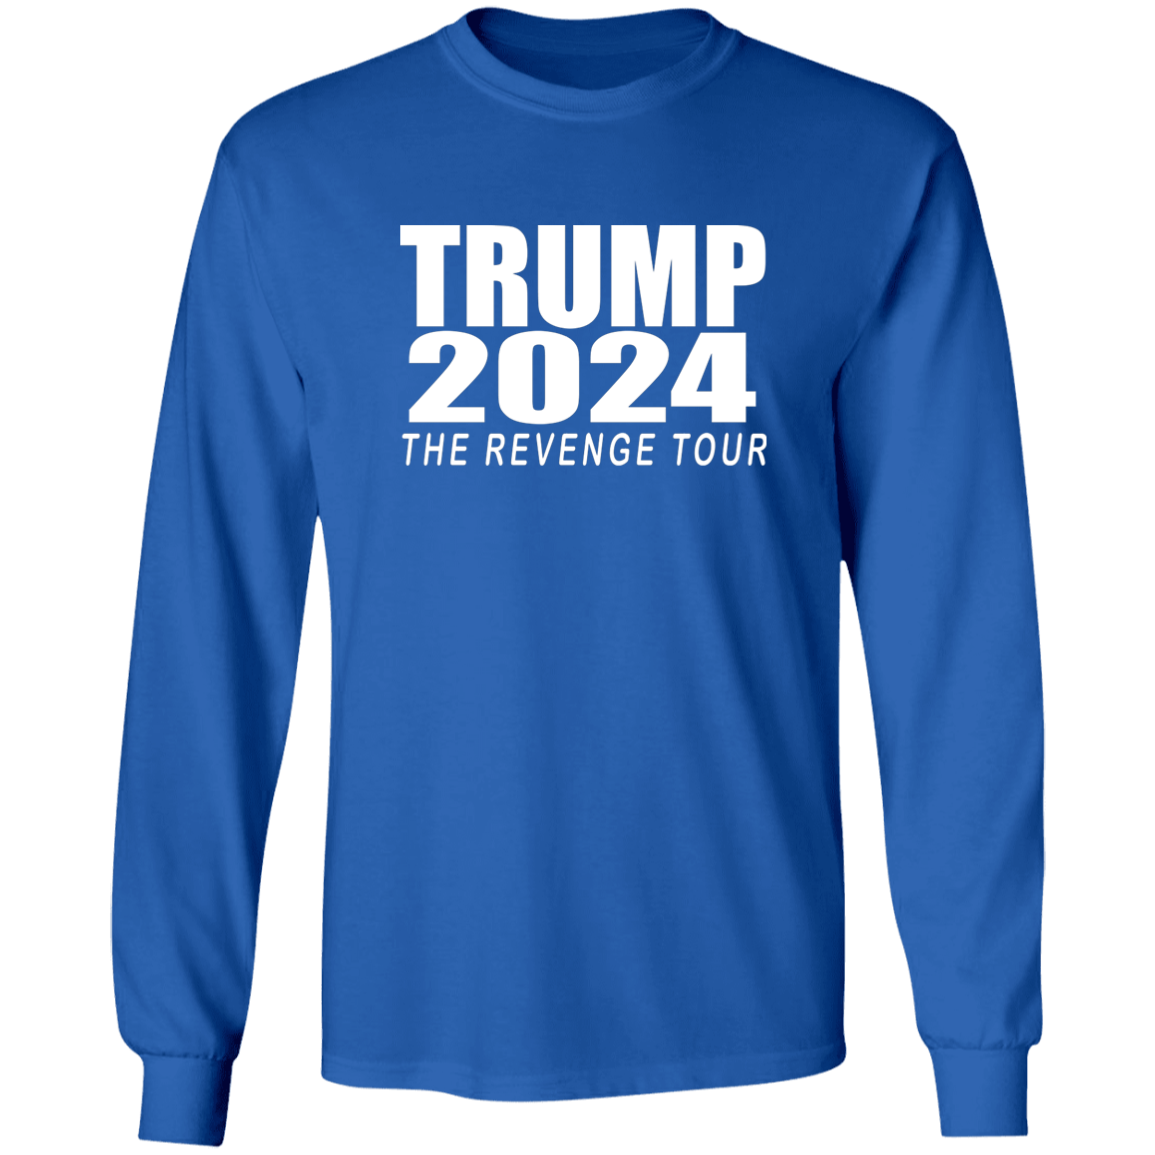 Trump 2024 "The Revenge Tour" Long Sleeve TShirt Patriot Powered